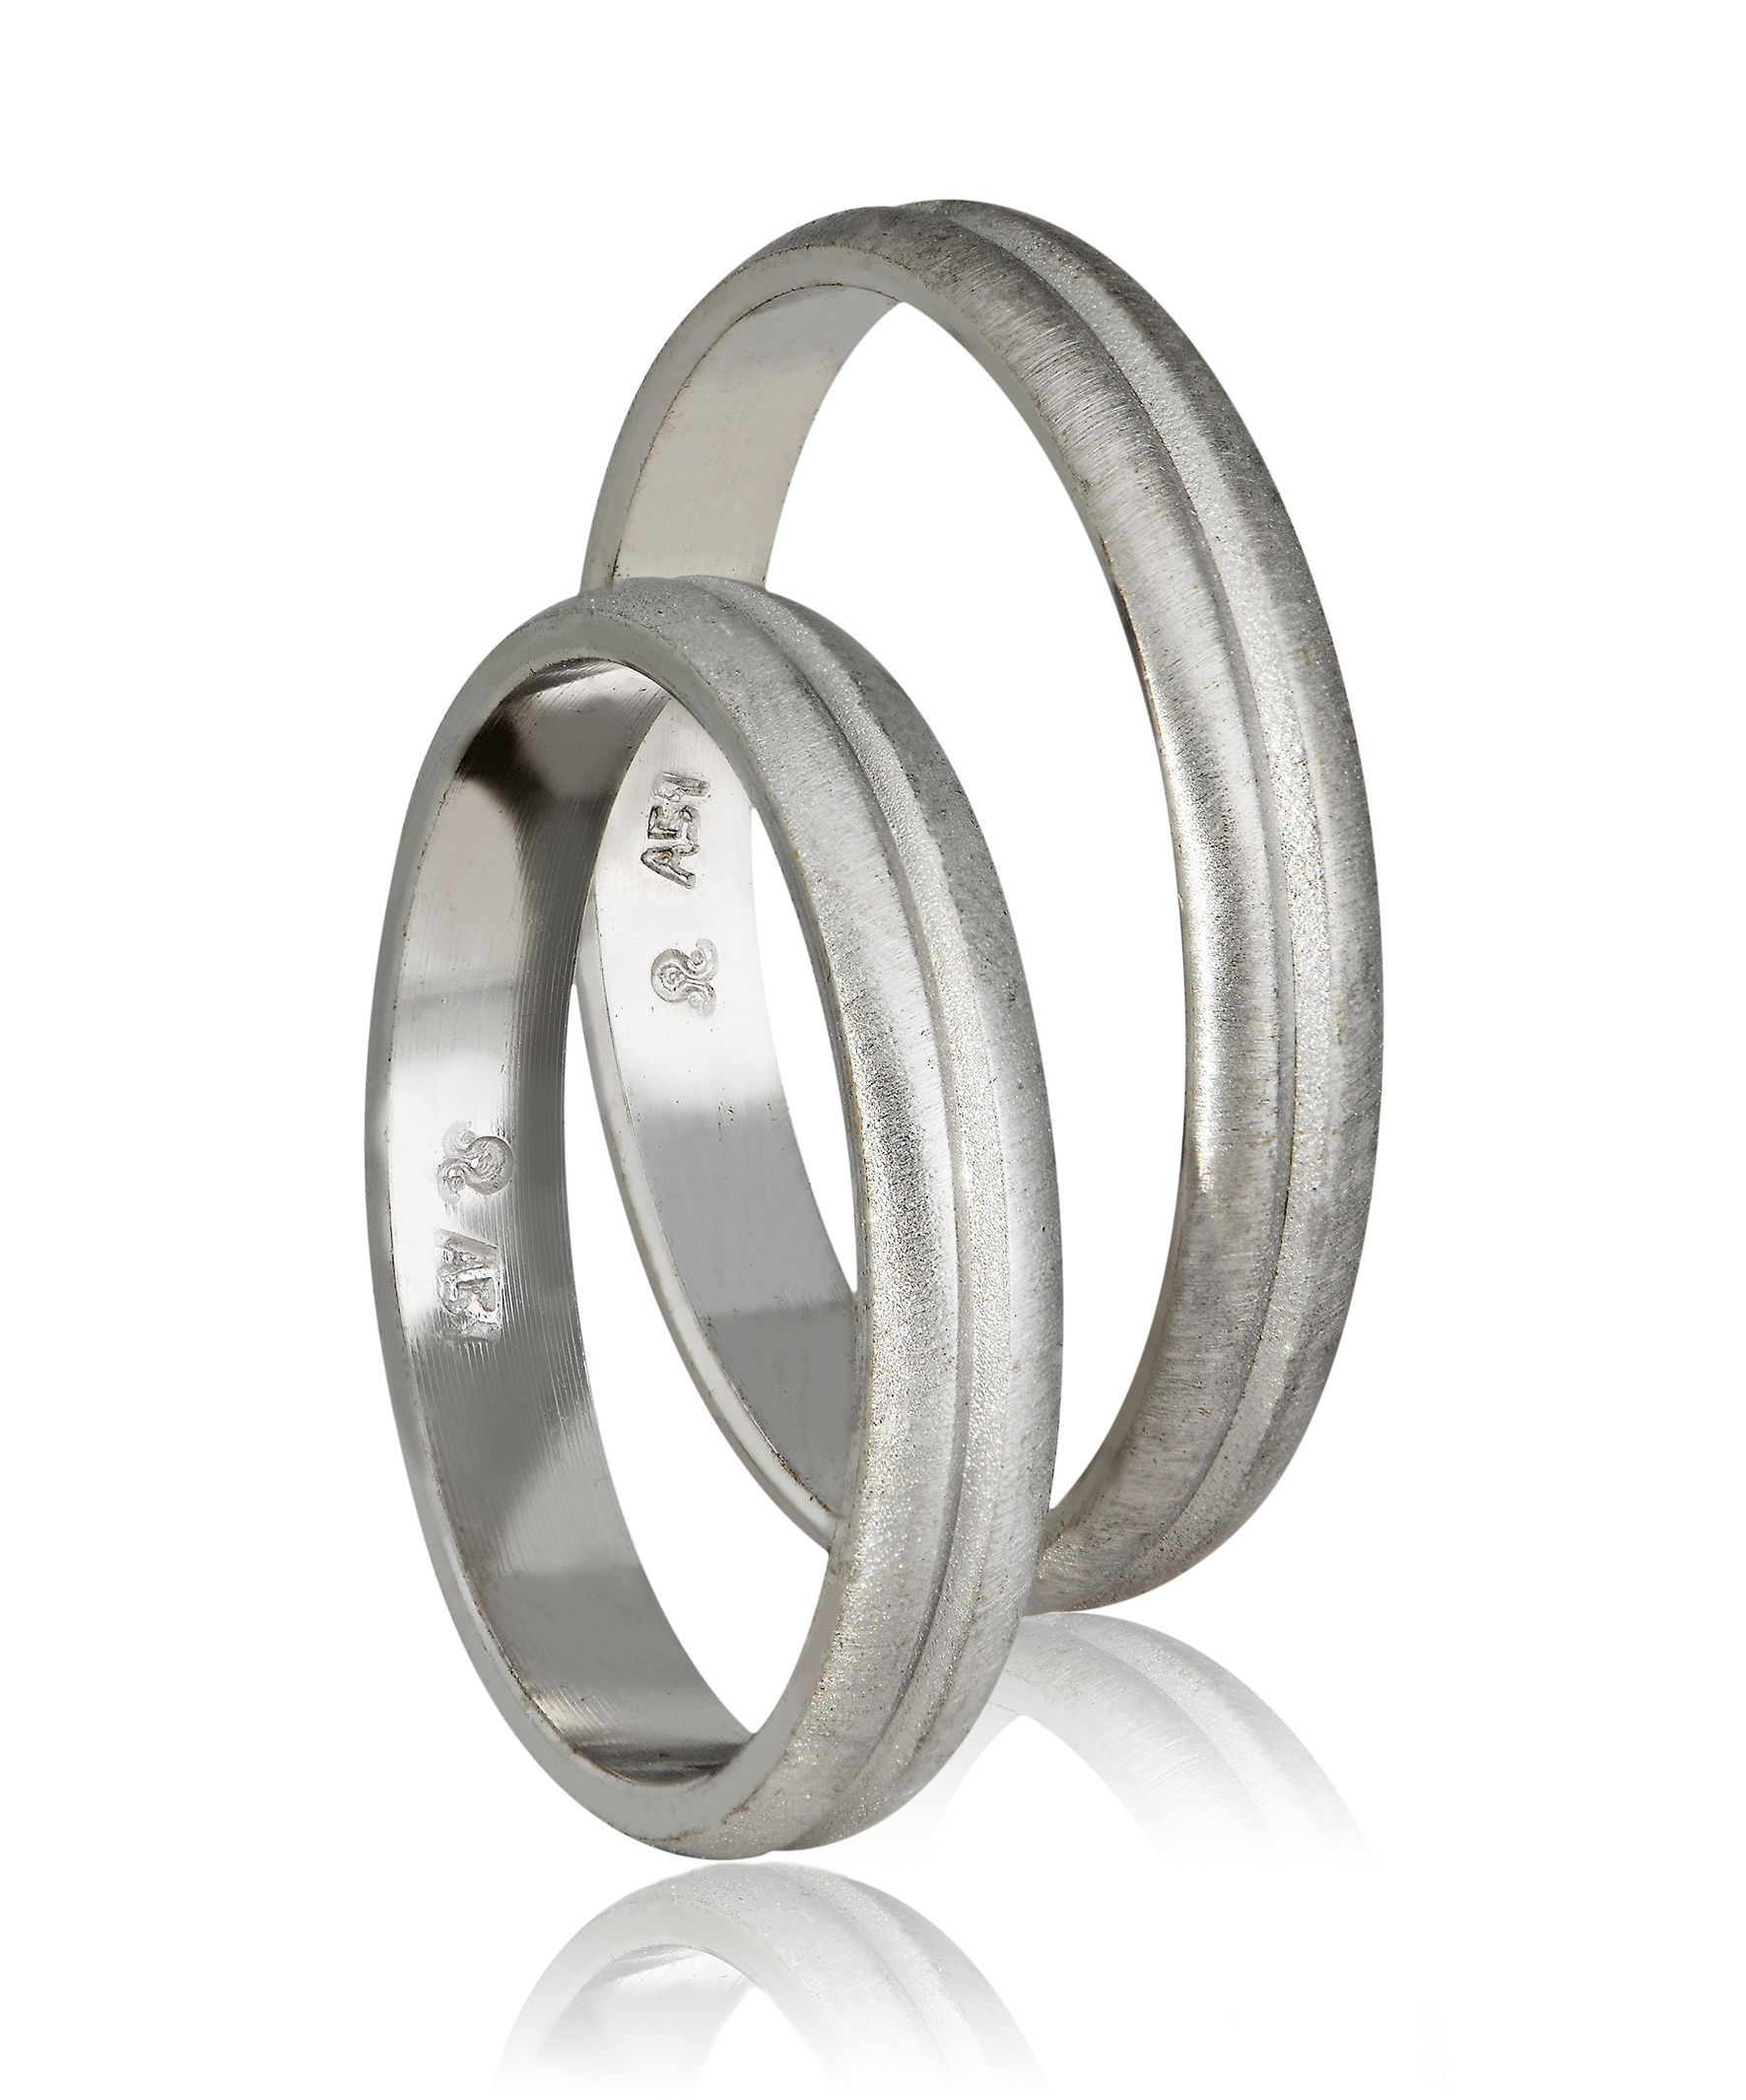 White gold wedding rings 3mm (code 411)